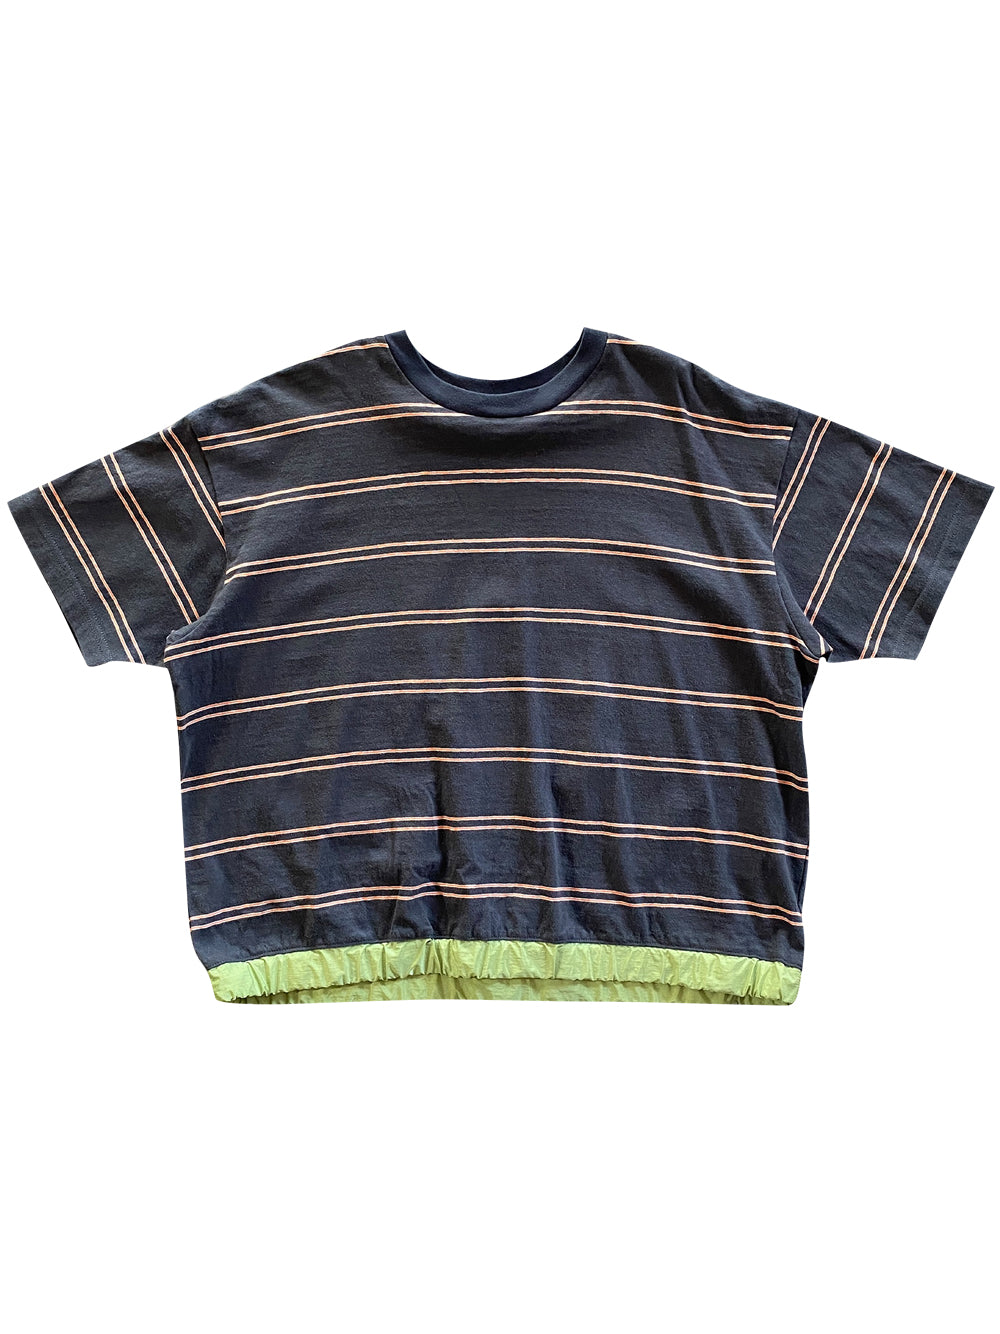 Charcoal Striped T-Shirt